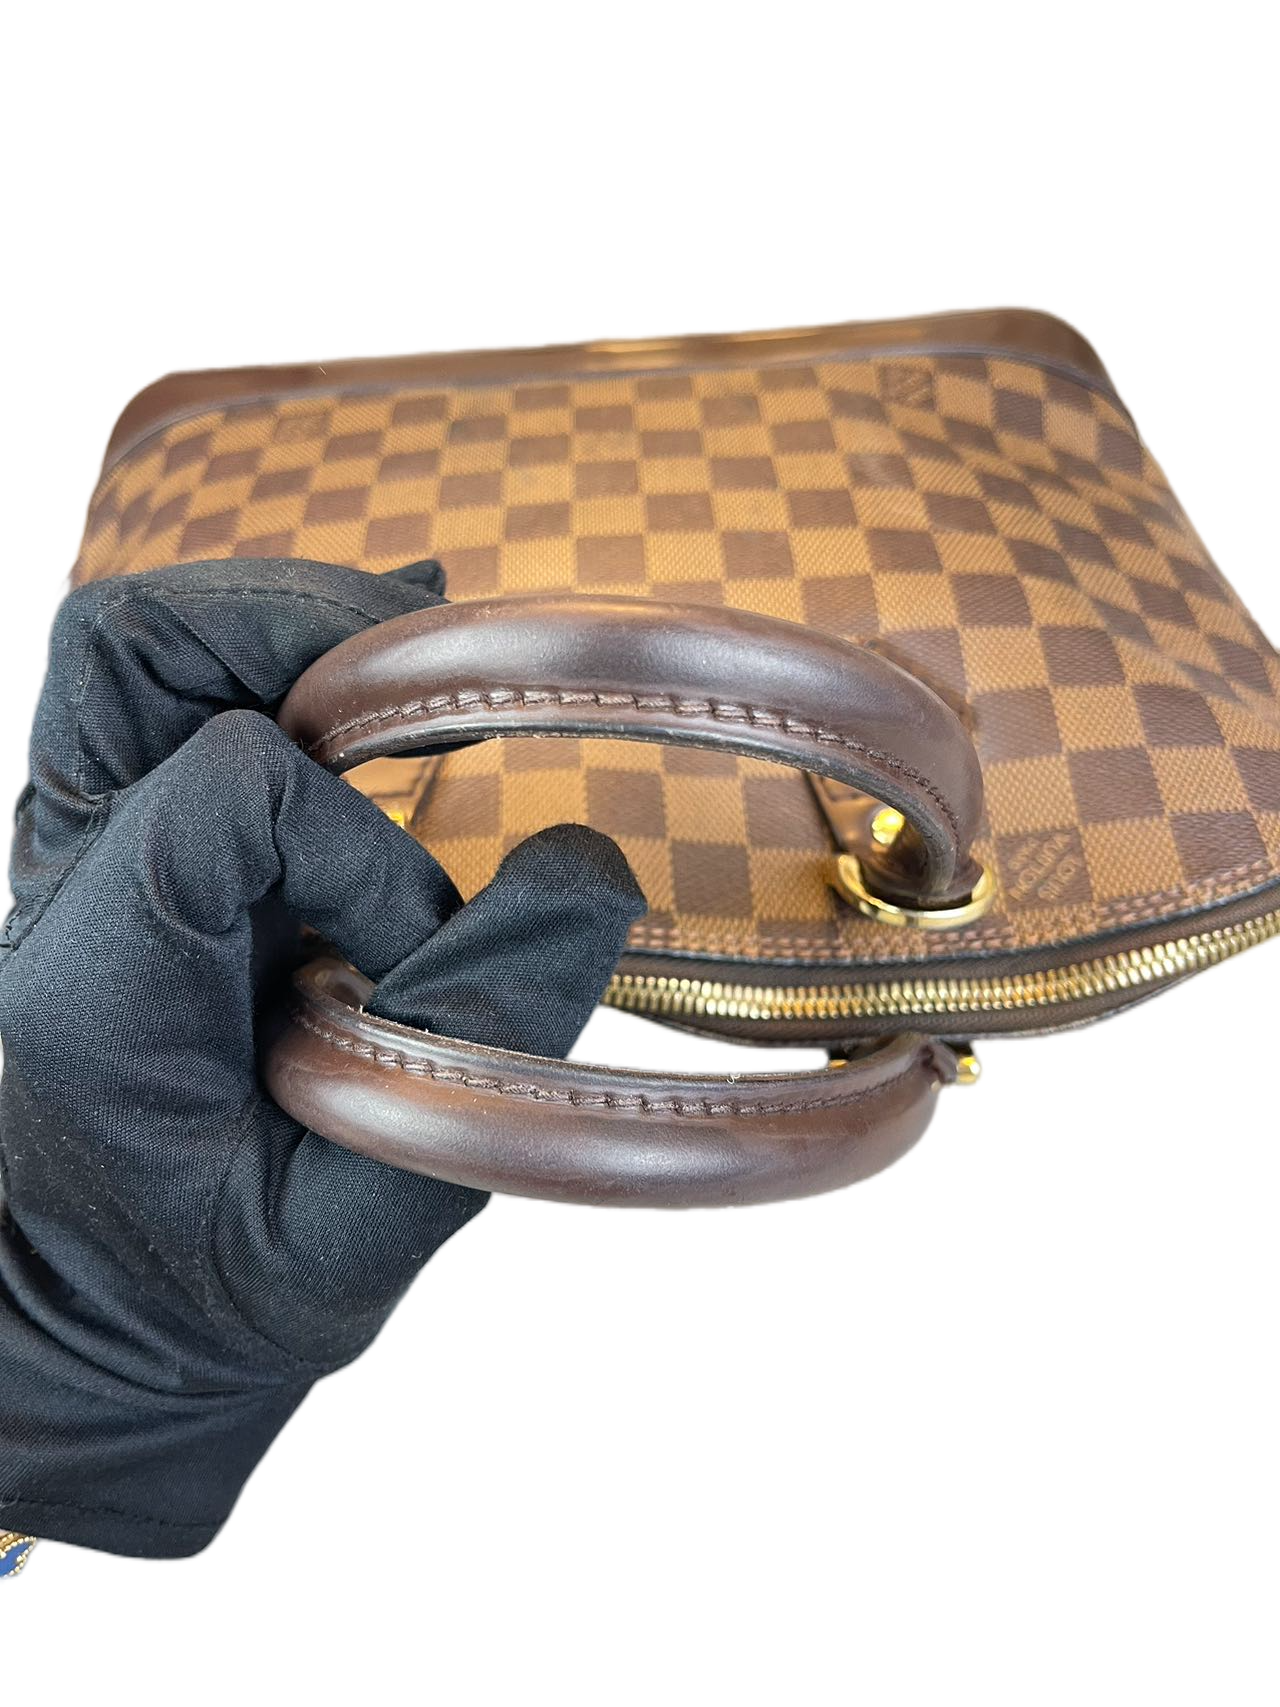 Preloved Louis Vuitton Damier Ebene Alma PM Satchel Handbag